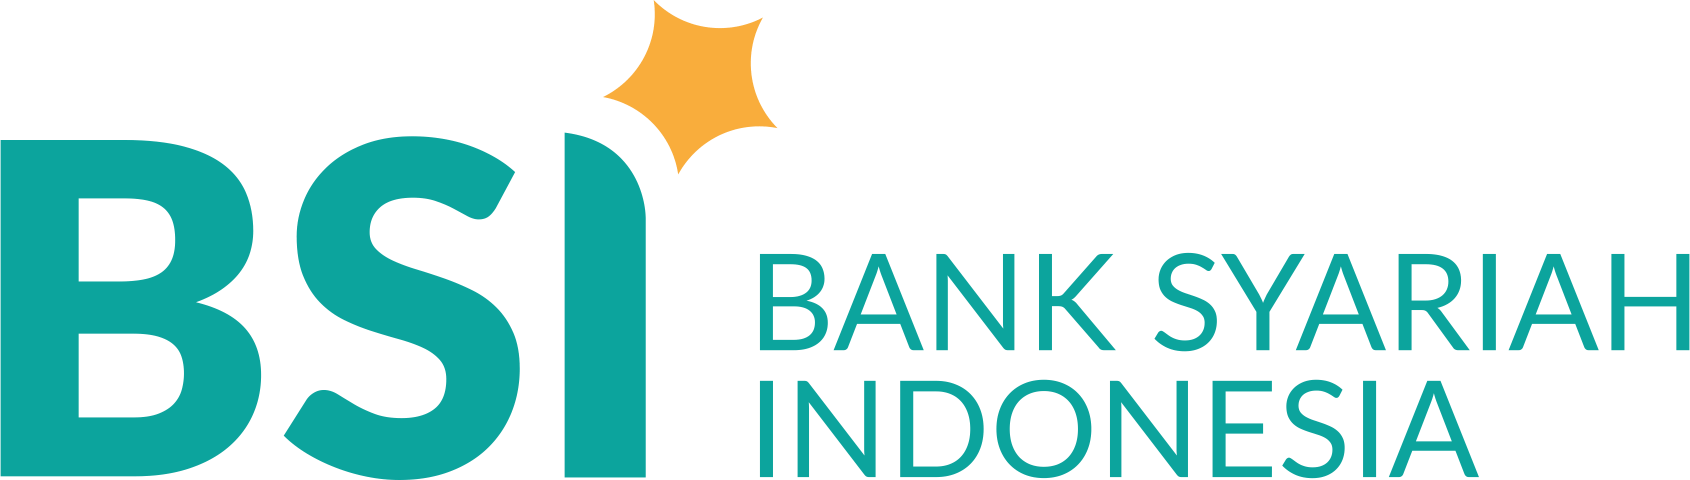 BSI-Bank-Syariah-Indonesia-Logo-PNG480p-Vector69Com-2.png